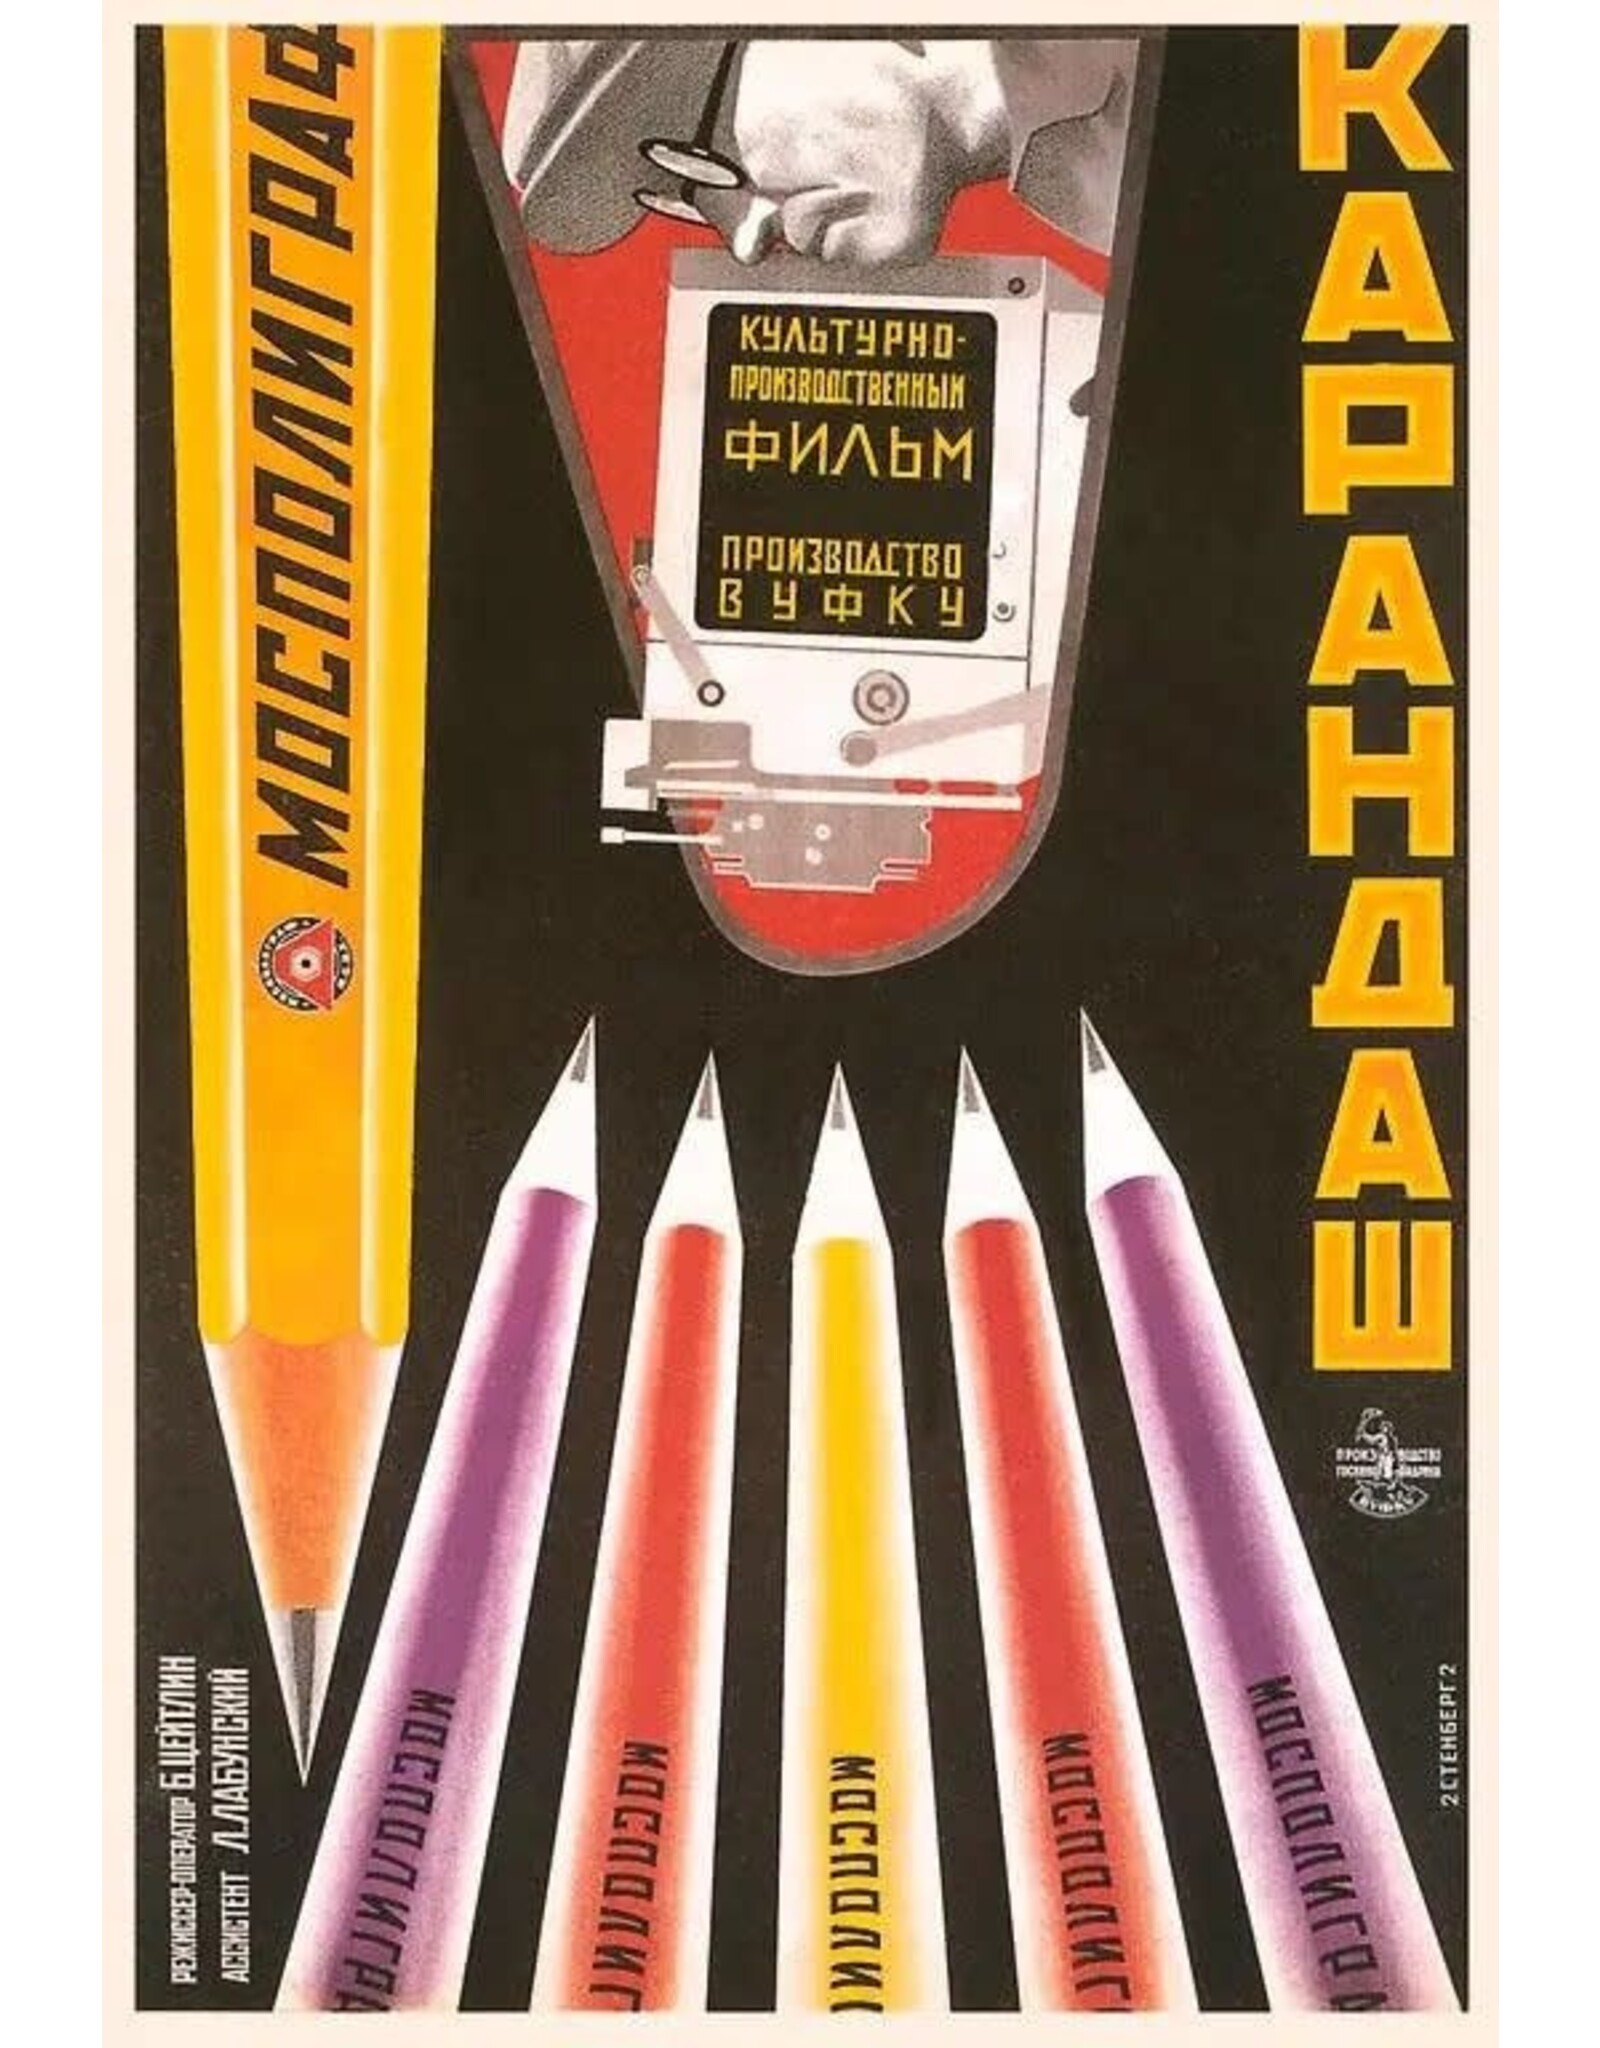 "Mospoligrafiya Pencil" Literacy Film Poster Magnet